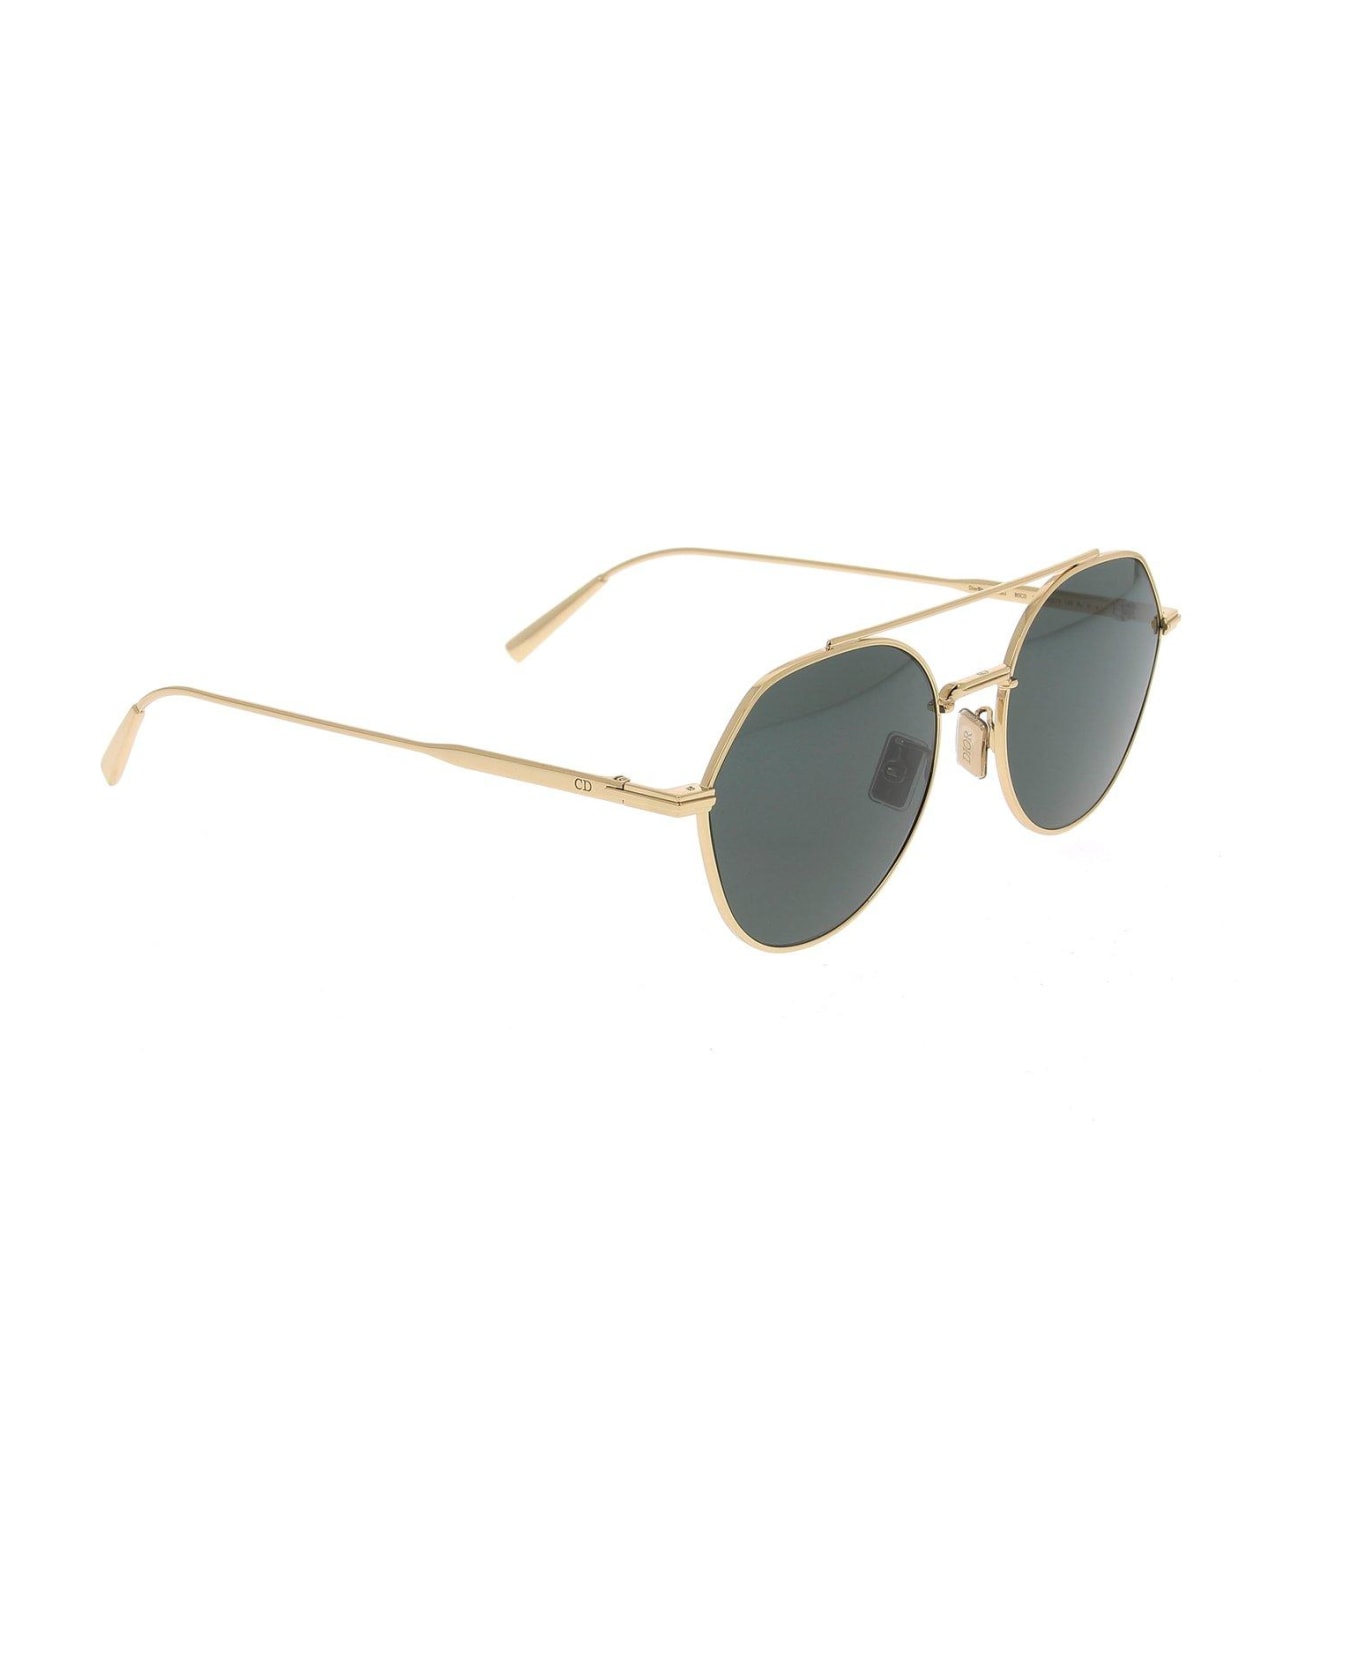 Dior Eyewear Round Frame Sunglasses - b0c0